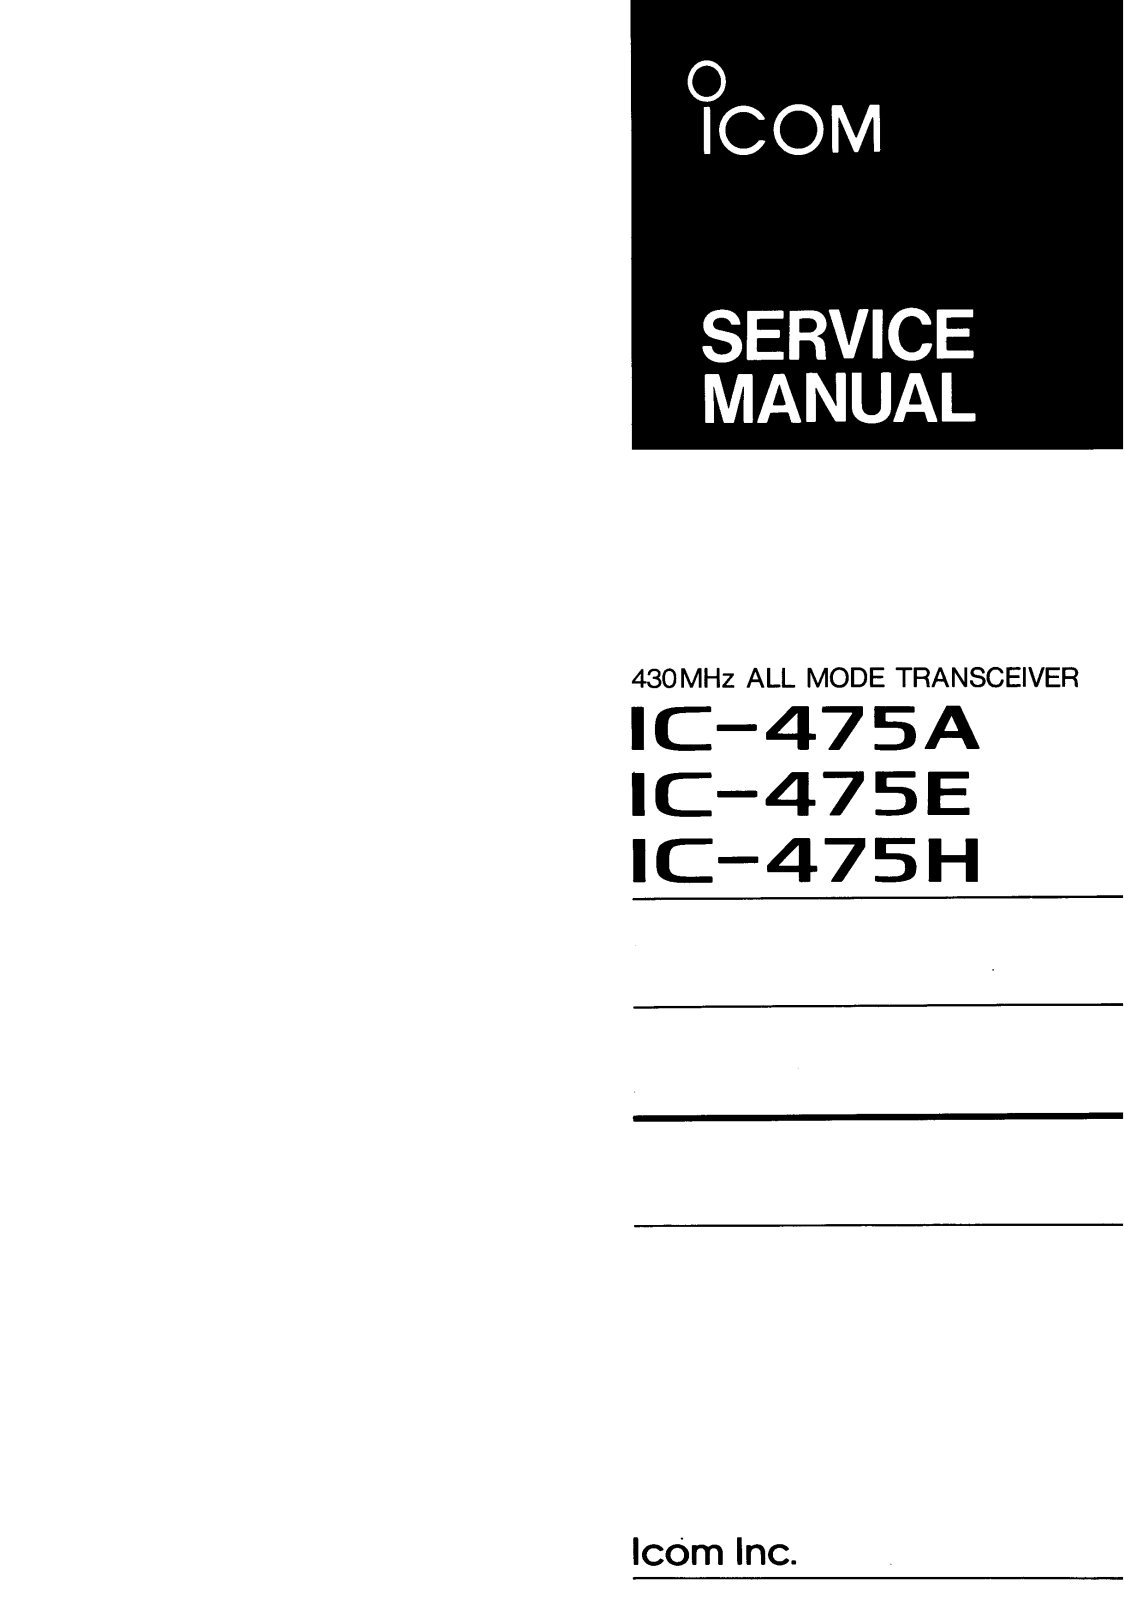 Icom IC-475H, IC-475E, IC-475A Service Manual